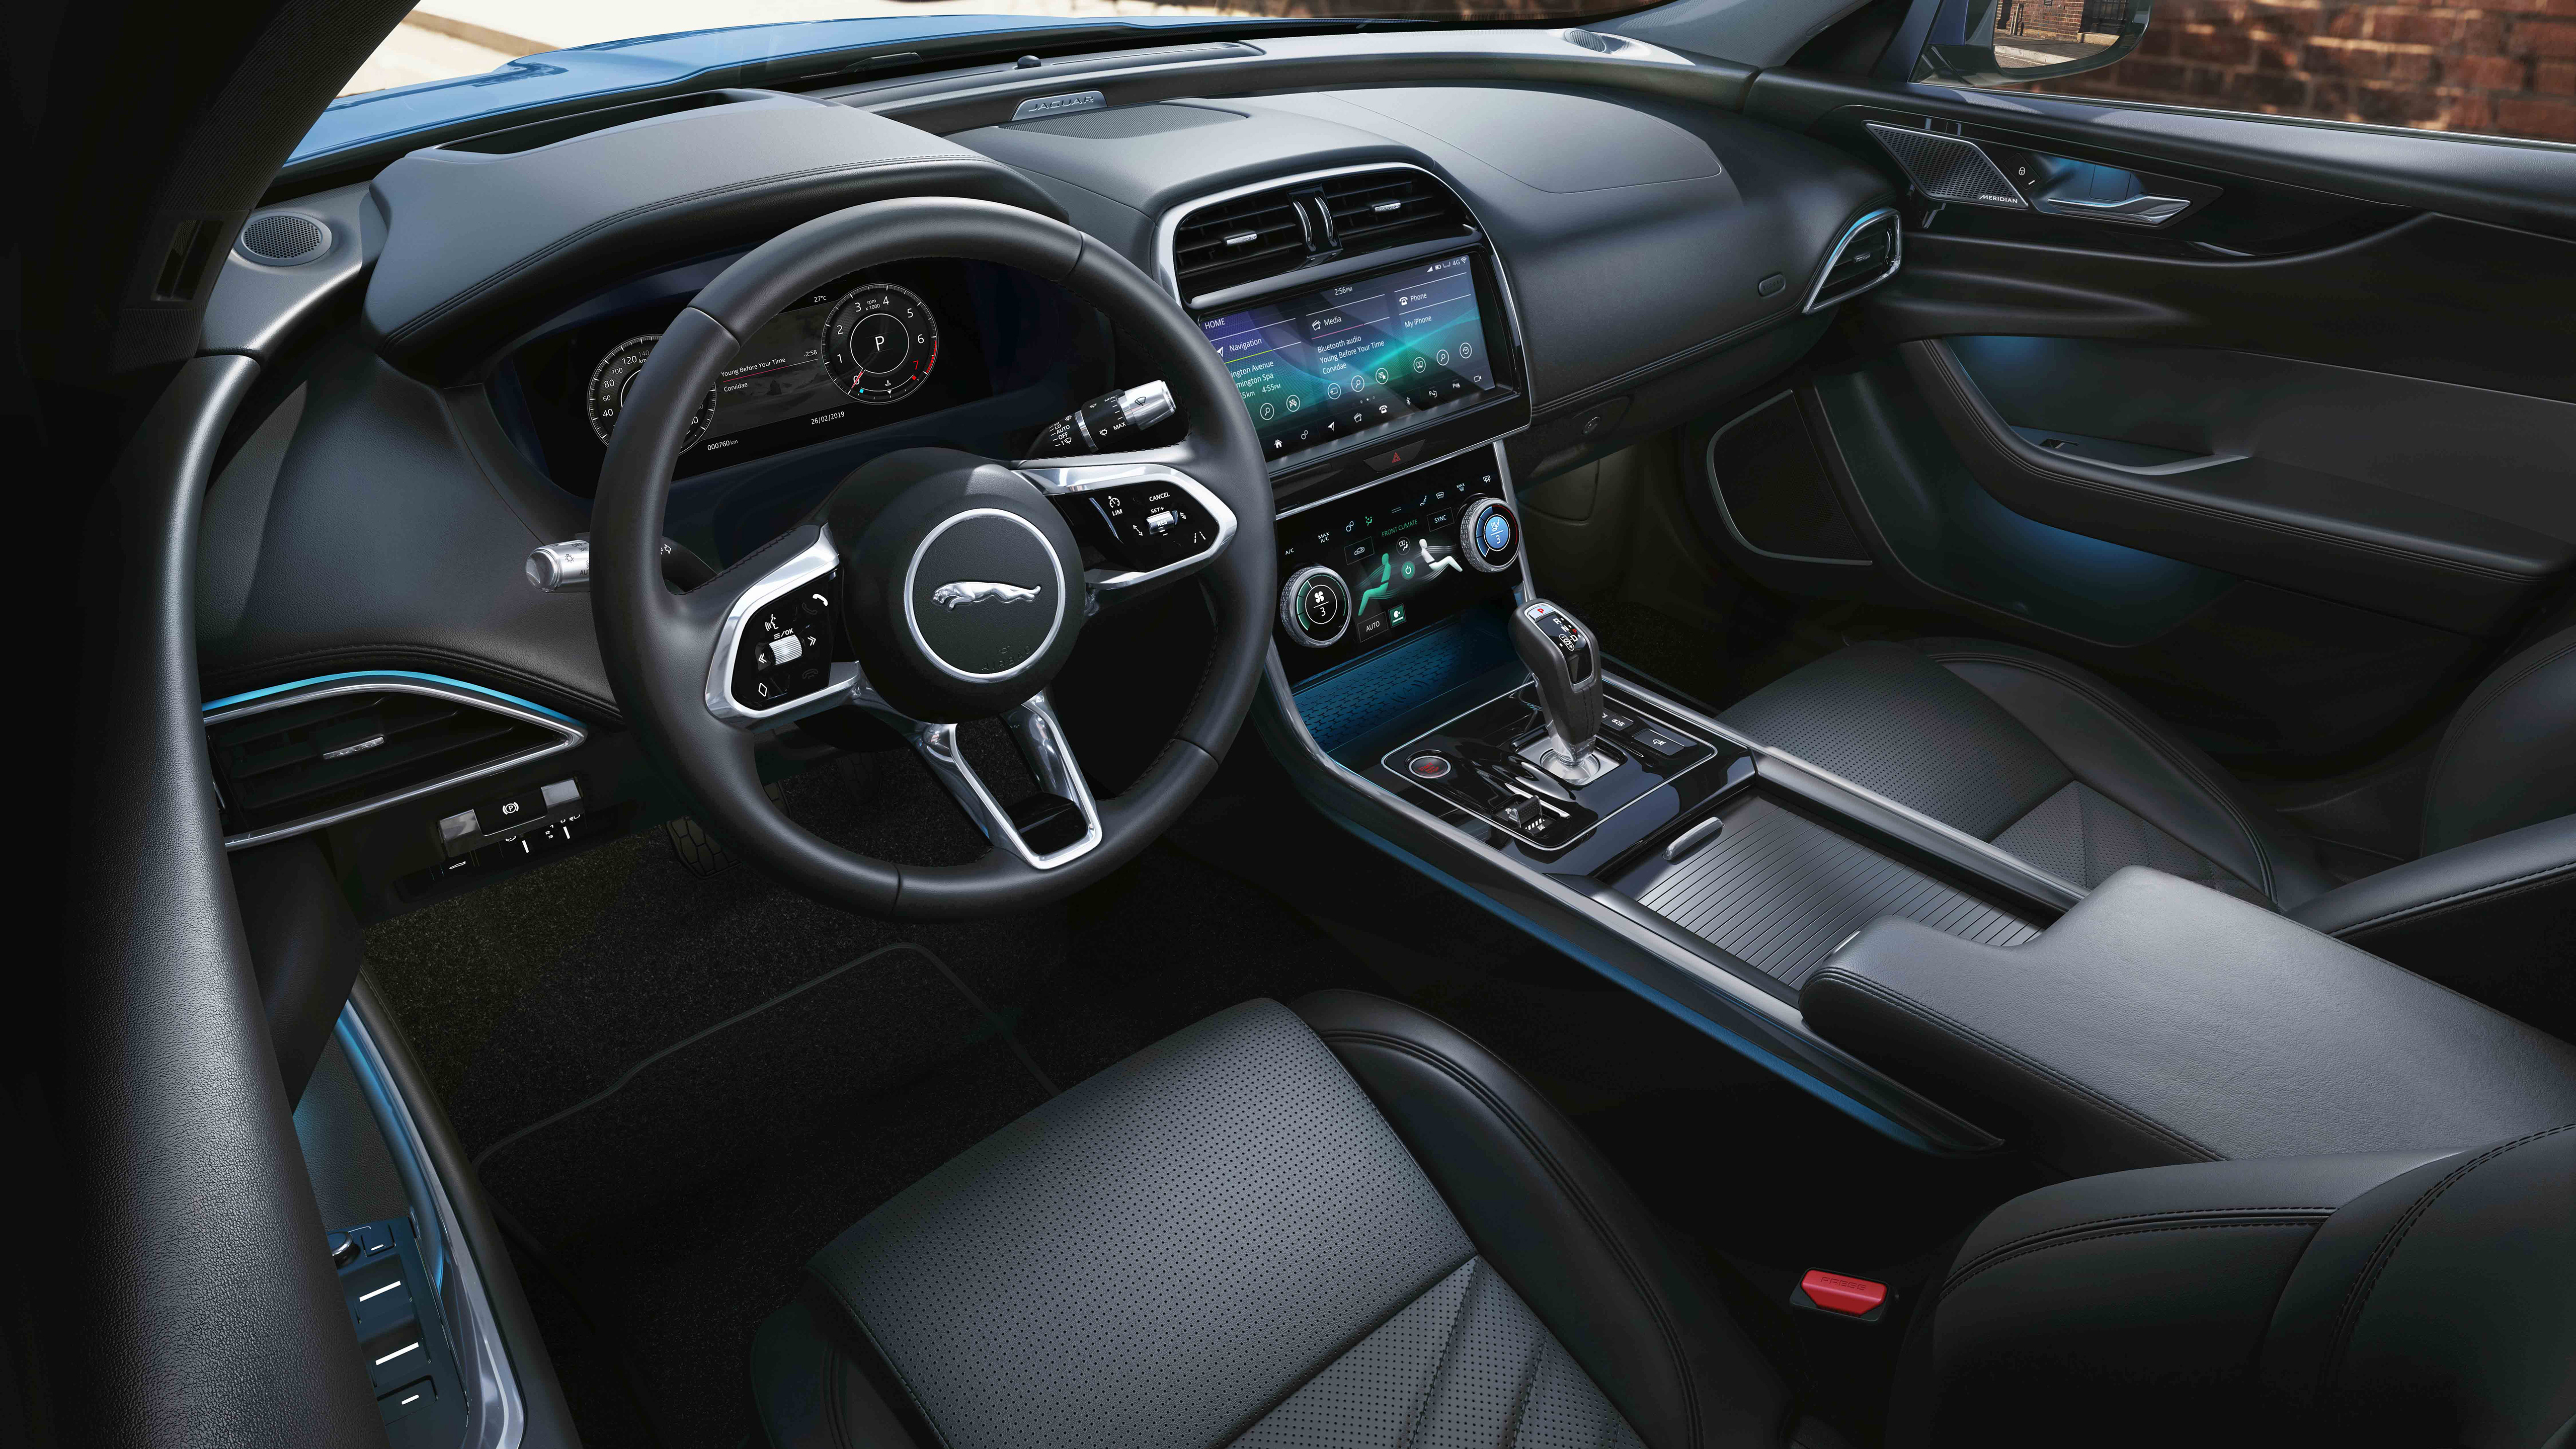 Jaguar Car Interior Hd Images Car Insurance Quotes And Rental